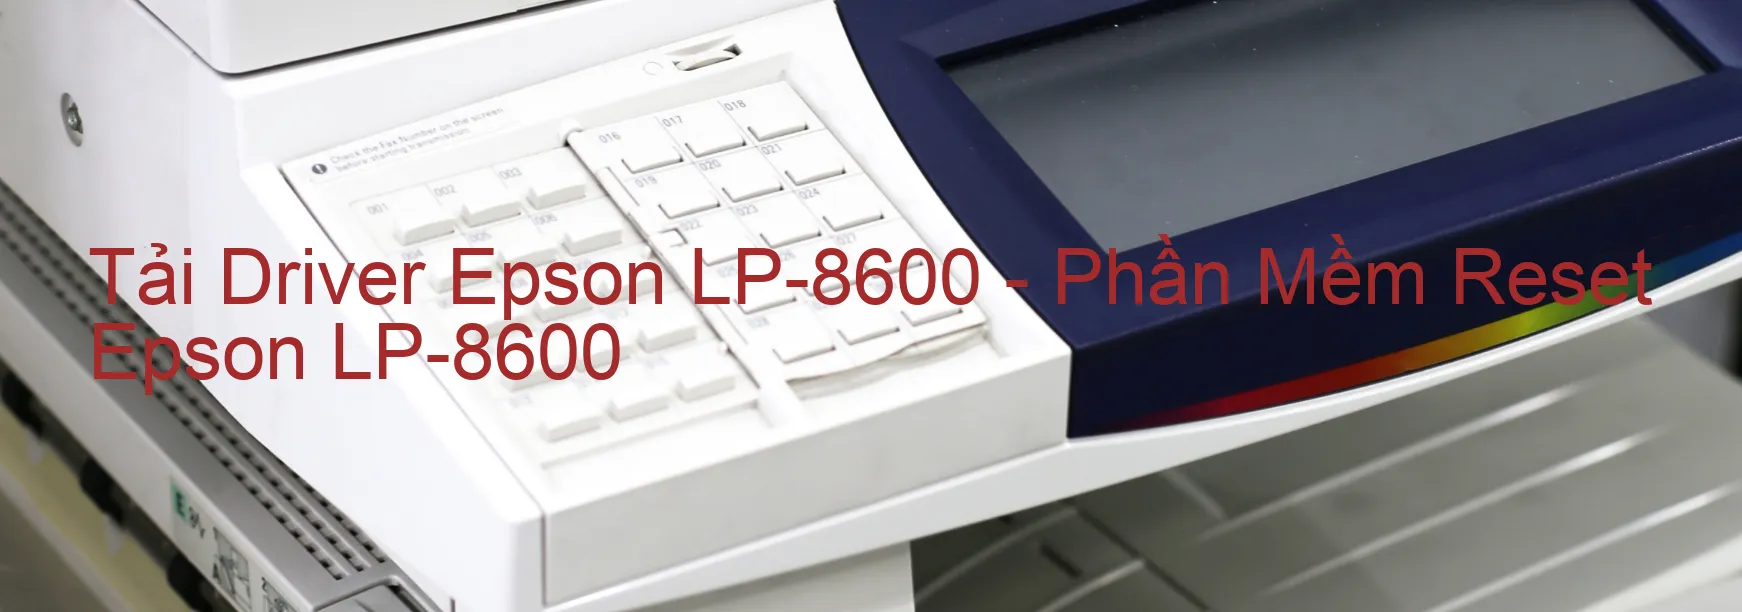 Driver Epson LP-8600, Phần Mềm Reset Epson LP-8600